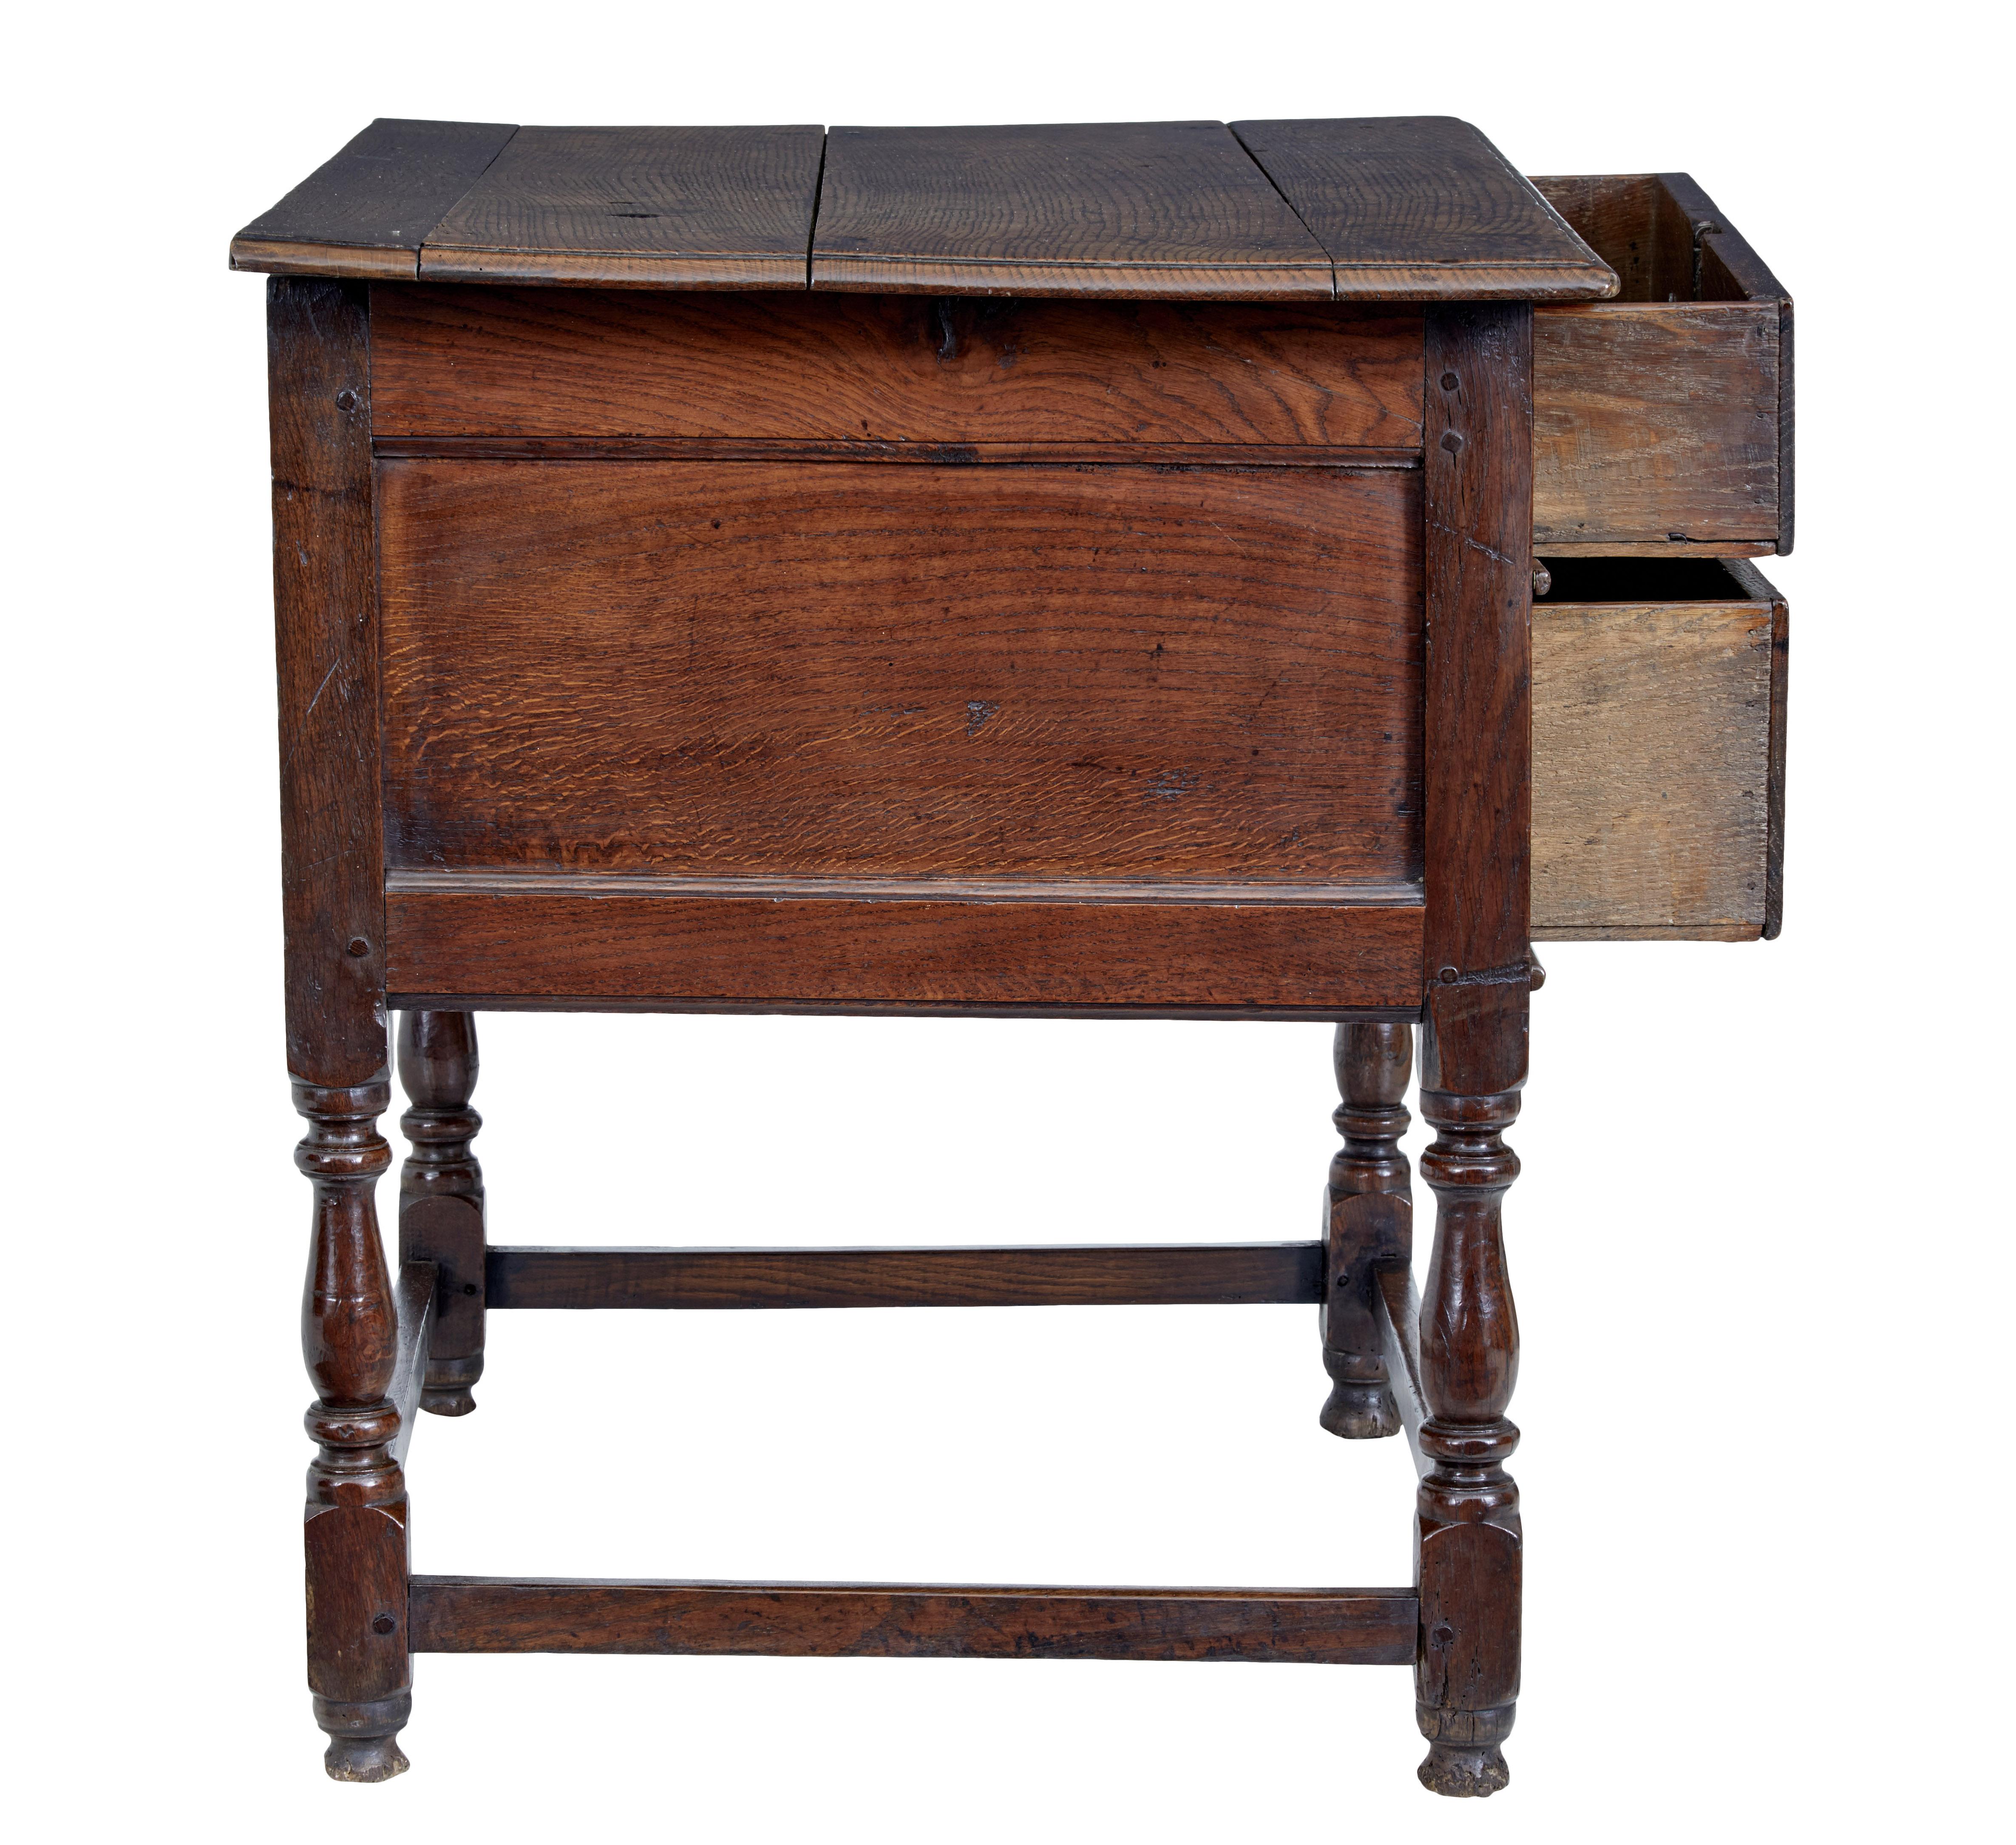 Georgian Early 18th century English 2 drawer oak side table